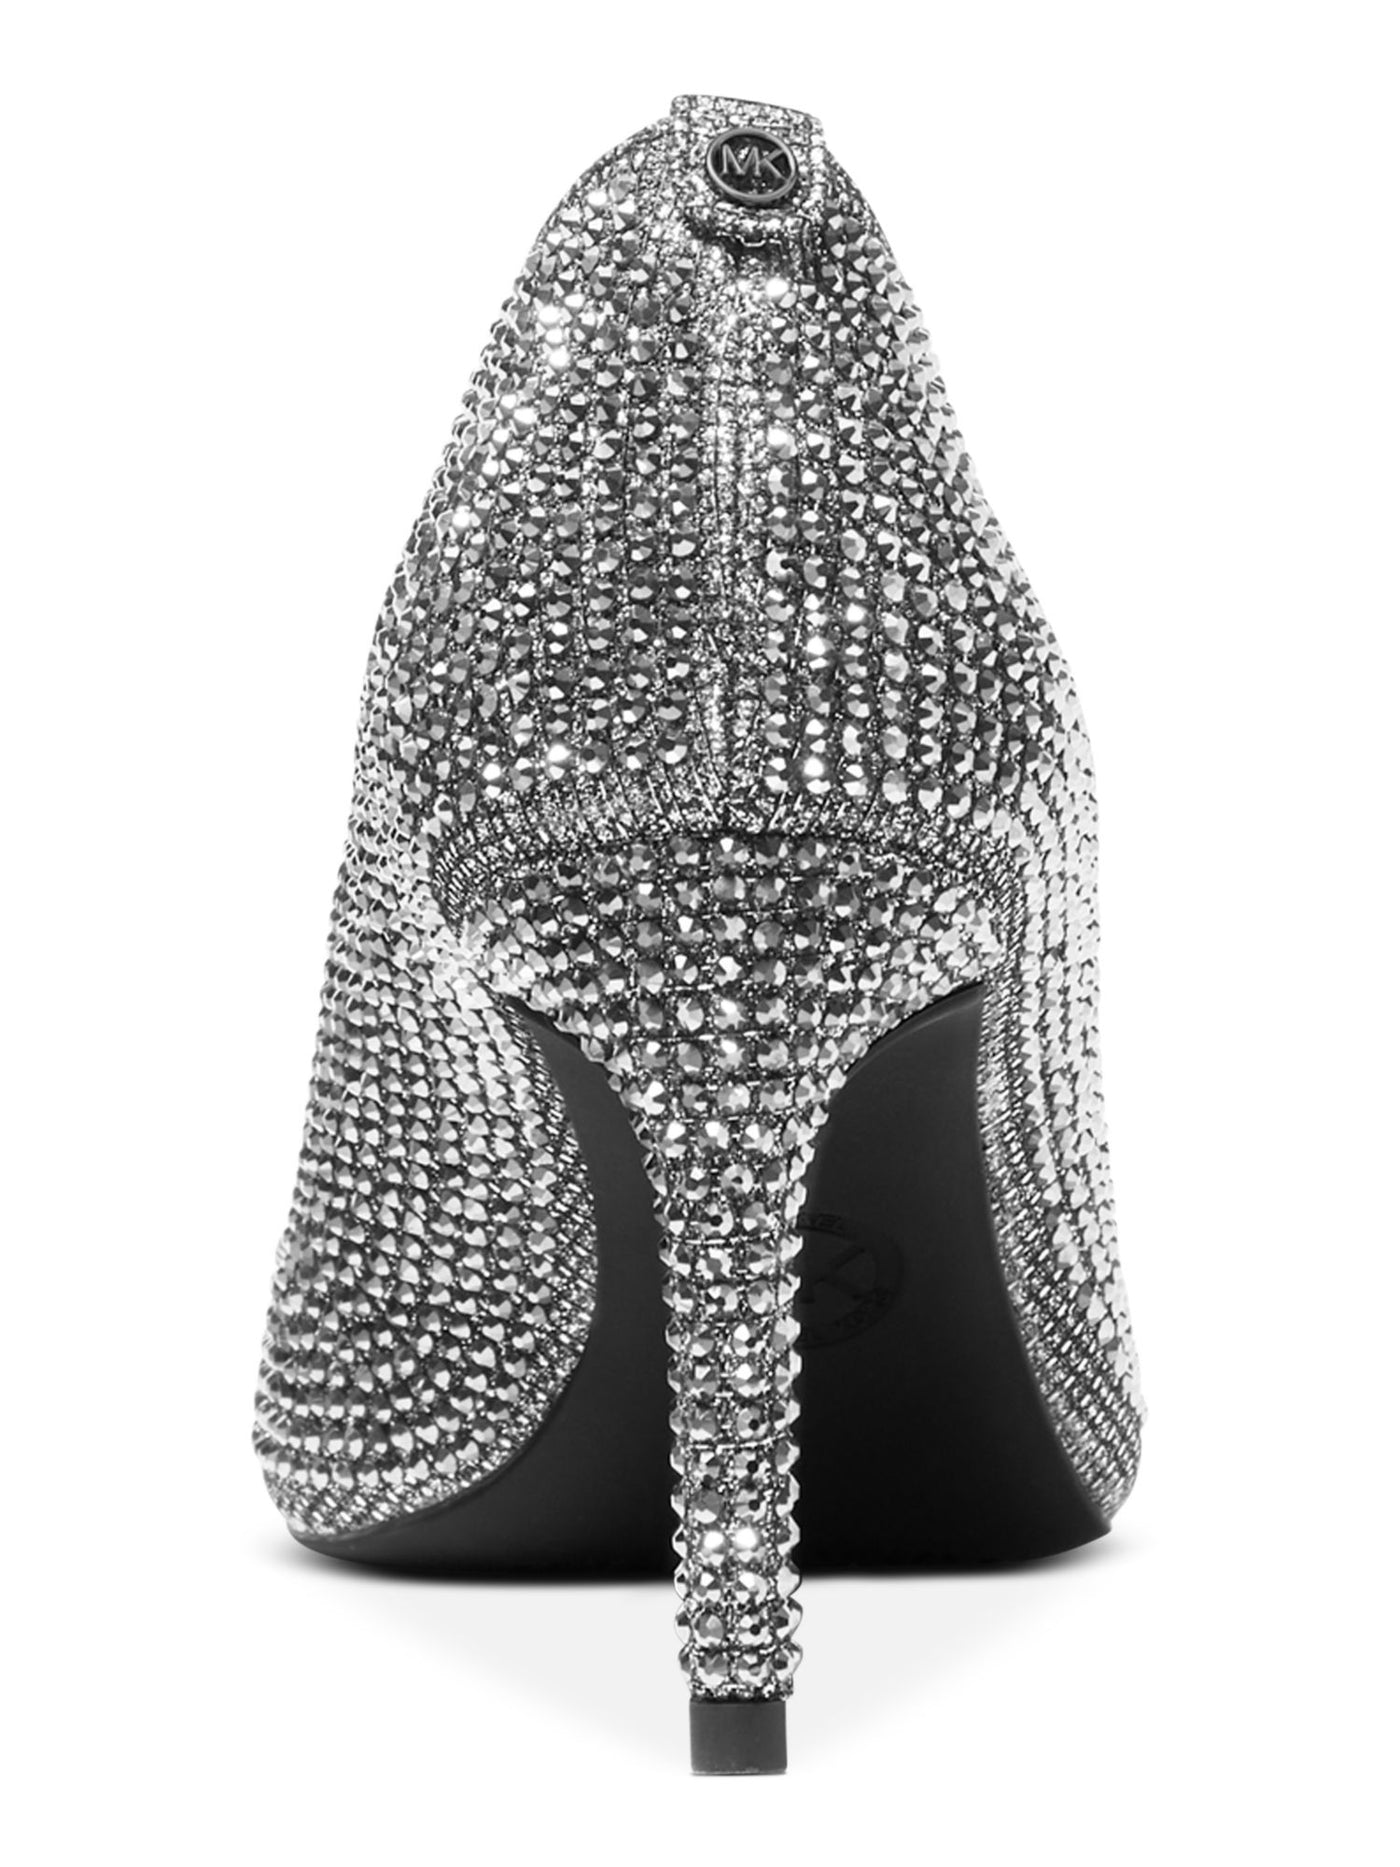 MICHAEL MICHAEL KORS Womens Gray Rhinestone Padded Alina Pointed Toe Stiletto Slip On Dress Pumps Shoes 6.5 M